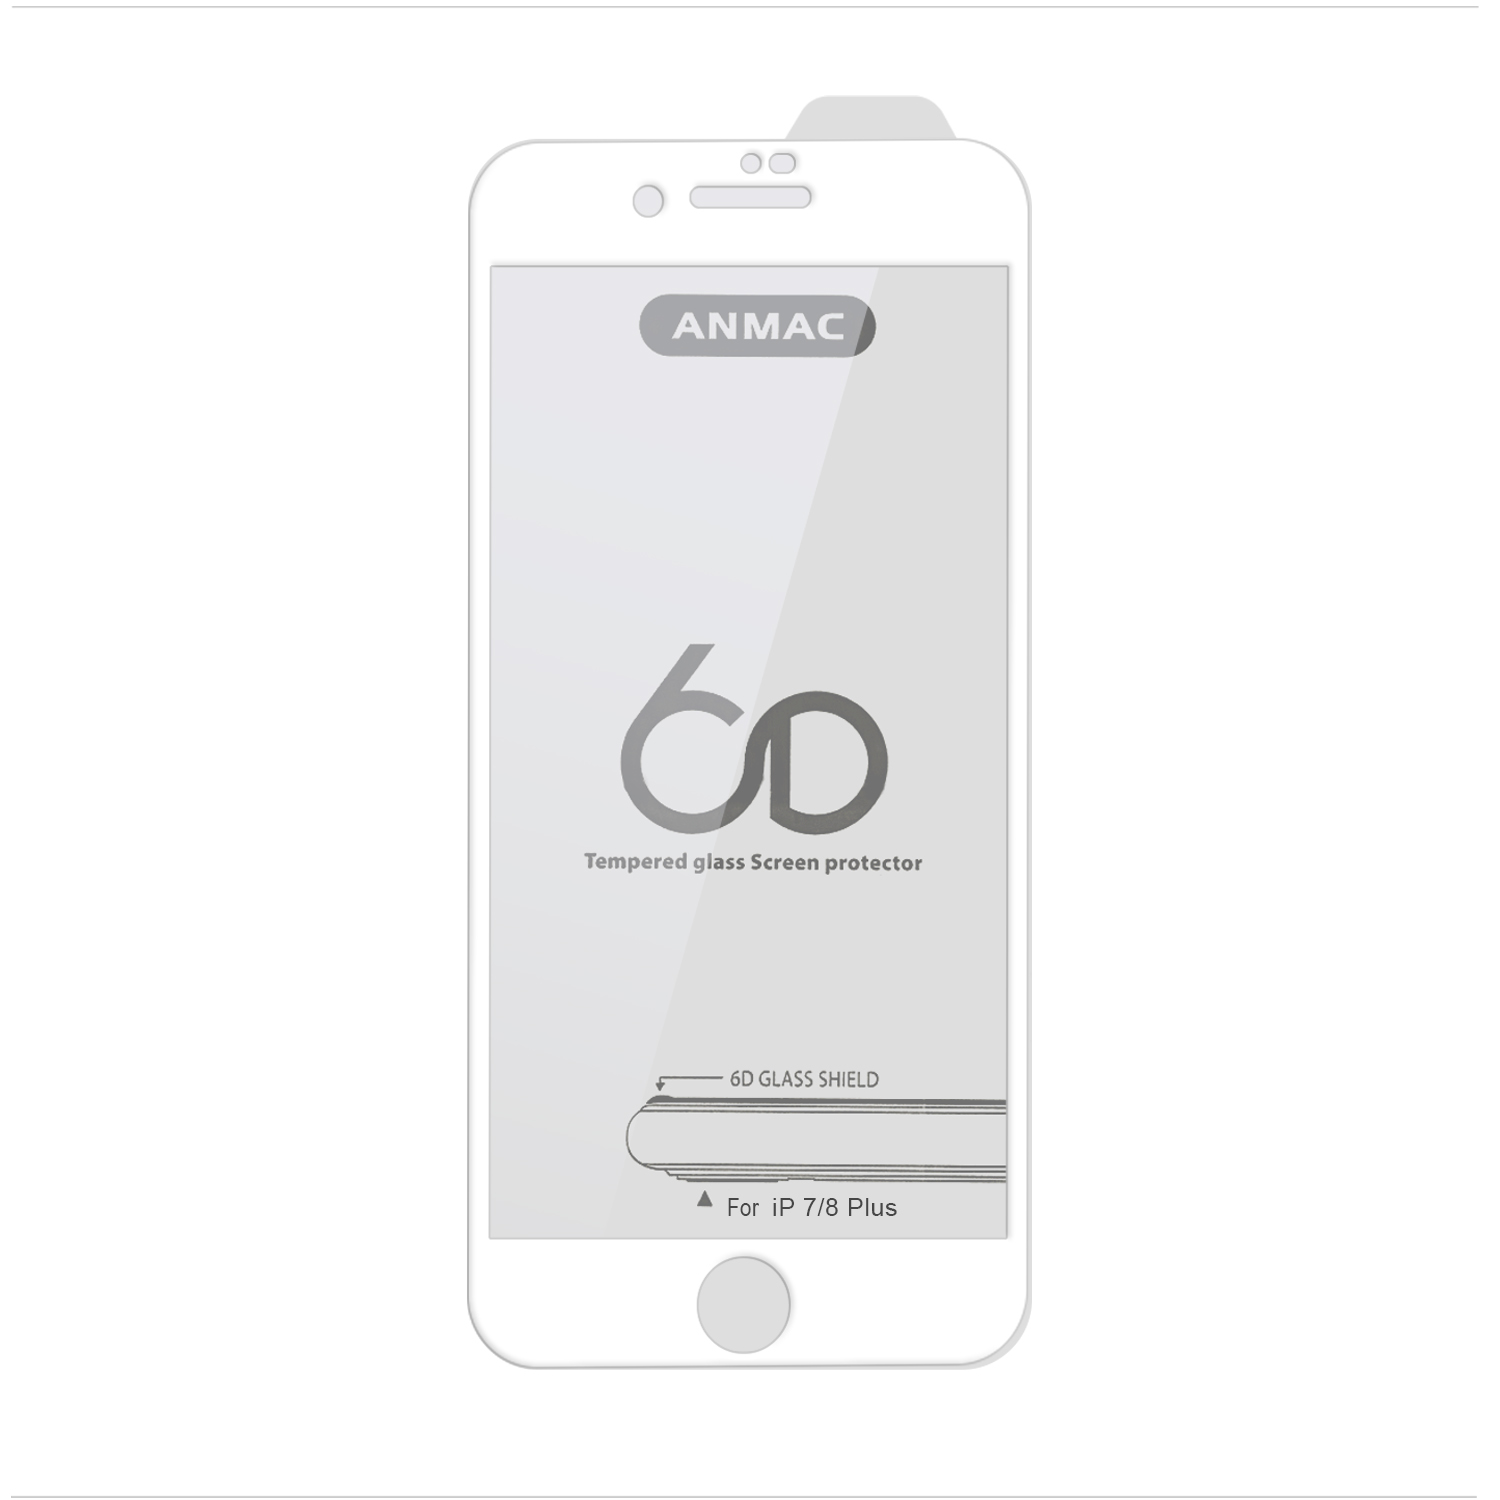 Защитное стекло iPh 7/8 Plus Anmac 6D White без упаковки Арт.1137153